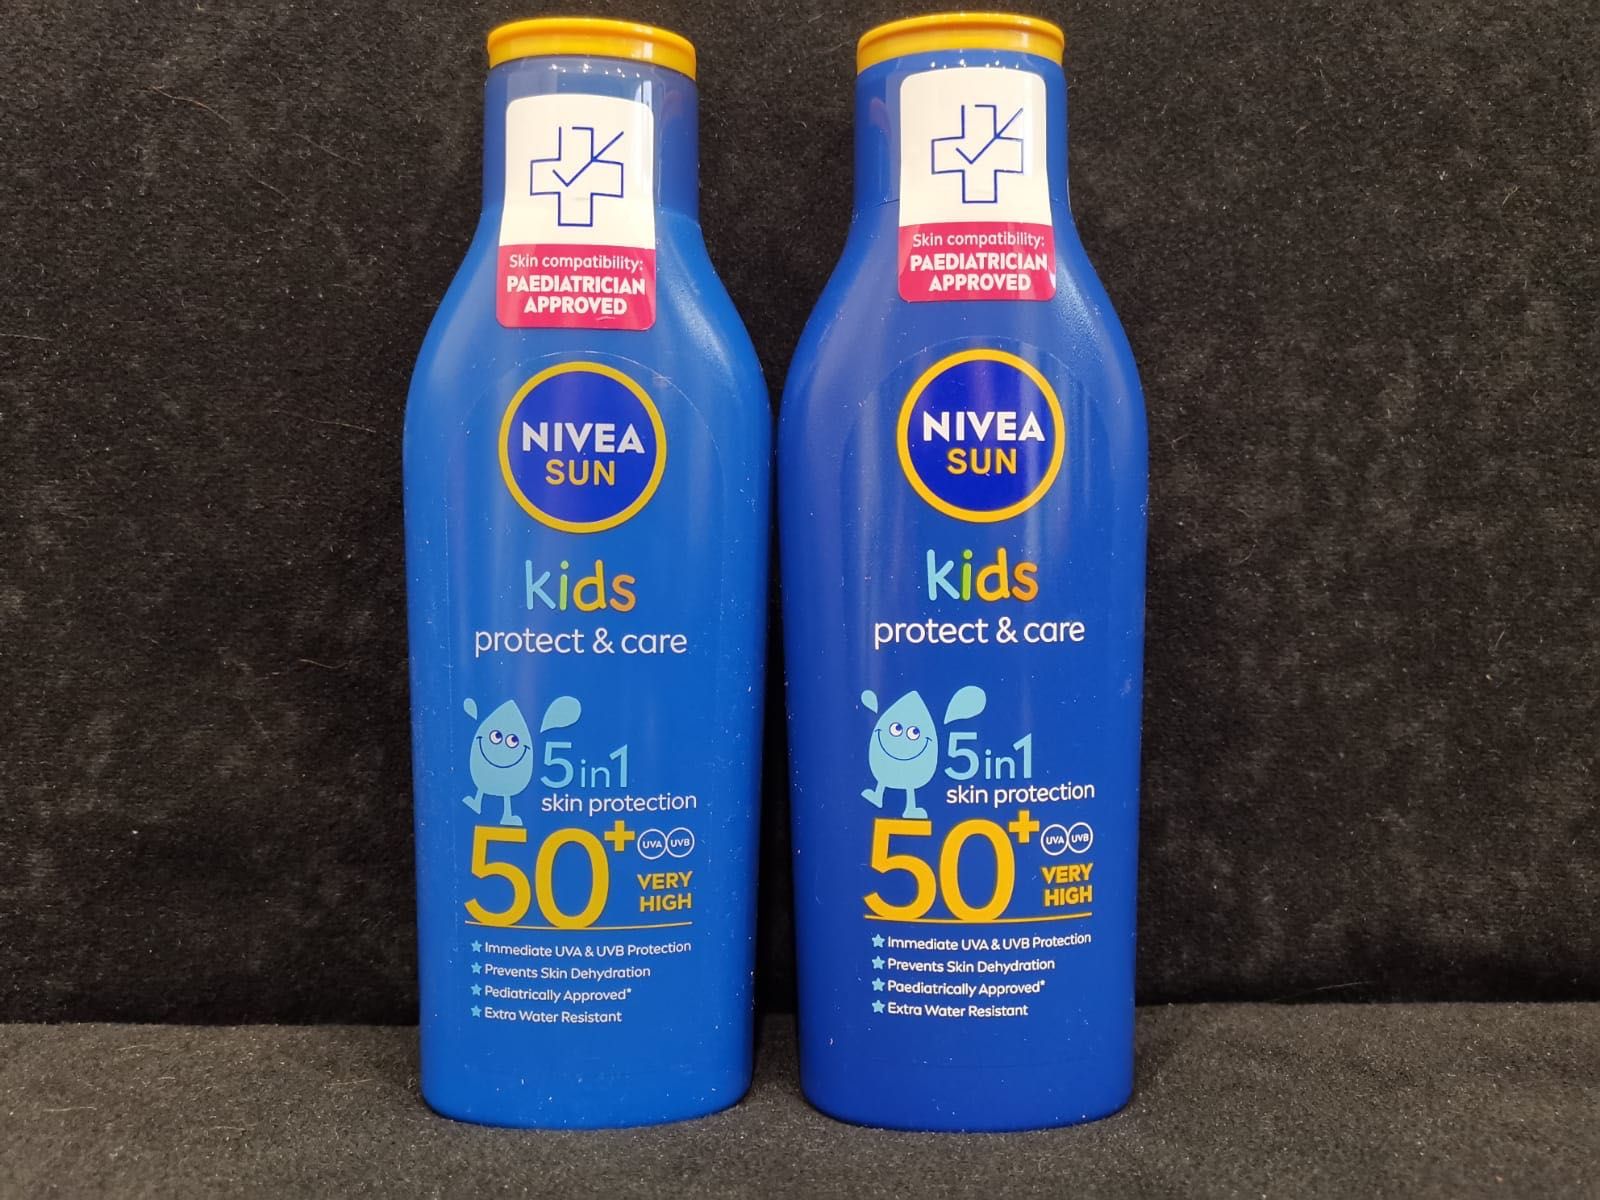 NIVEA SUN Kids Protect & Care SPF 50, 2 × 200 ml. Okazja.